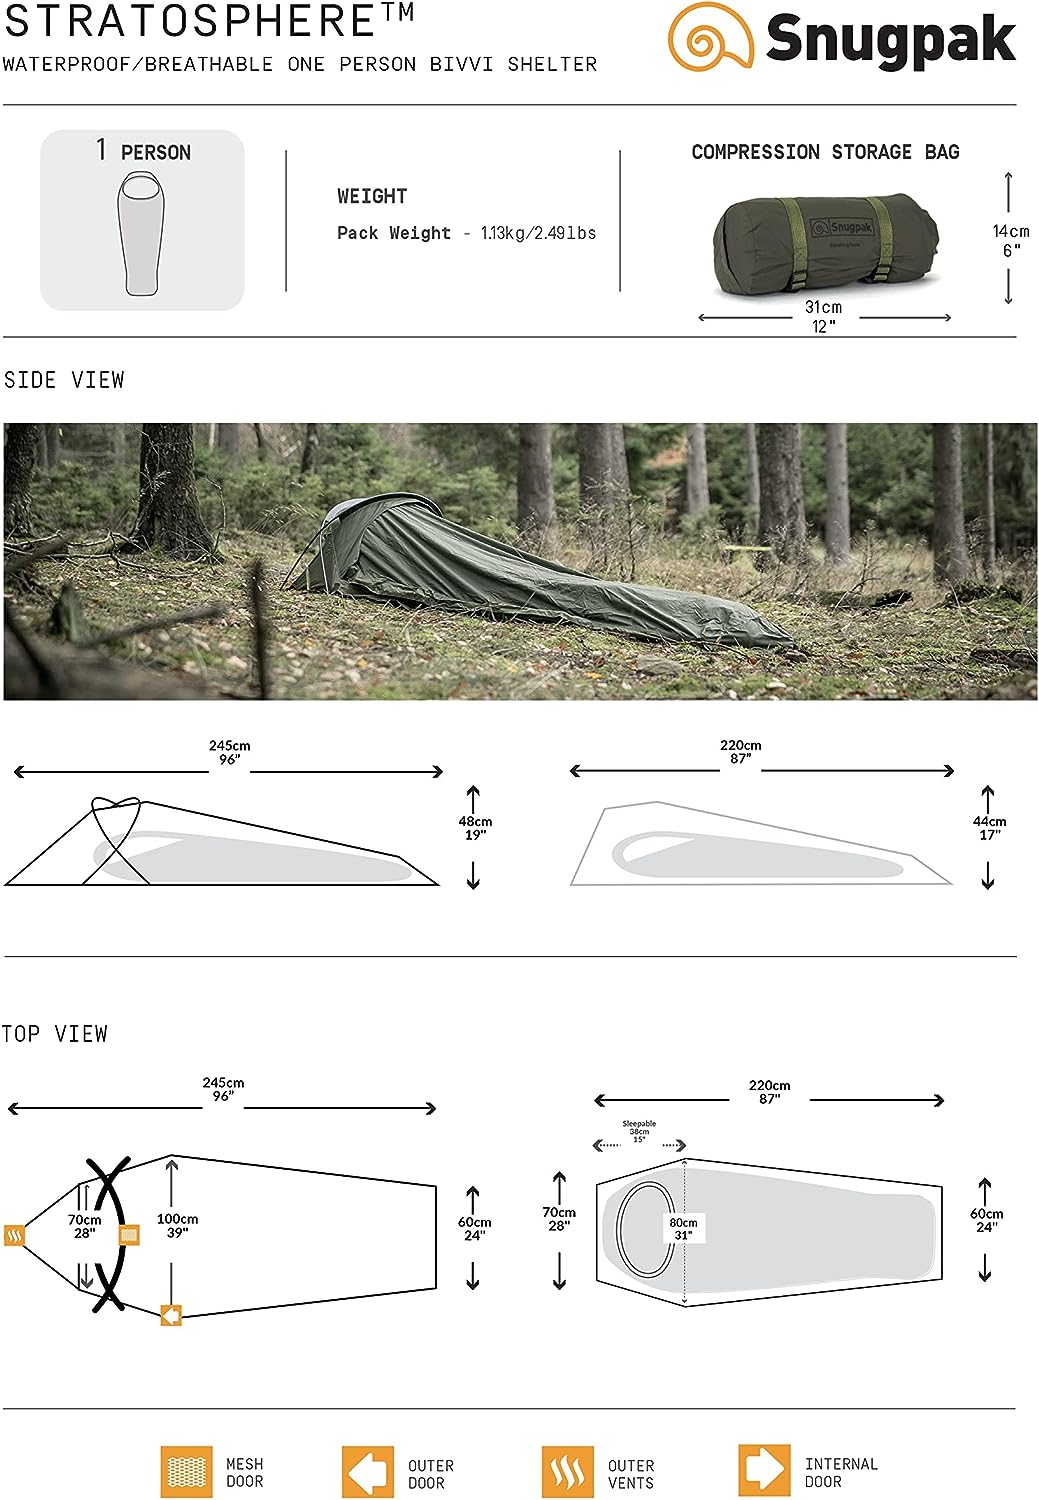 snugpak bivy tent green polyester waterproof shelter dimension